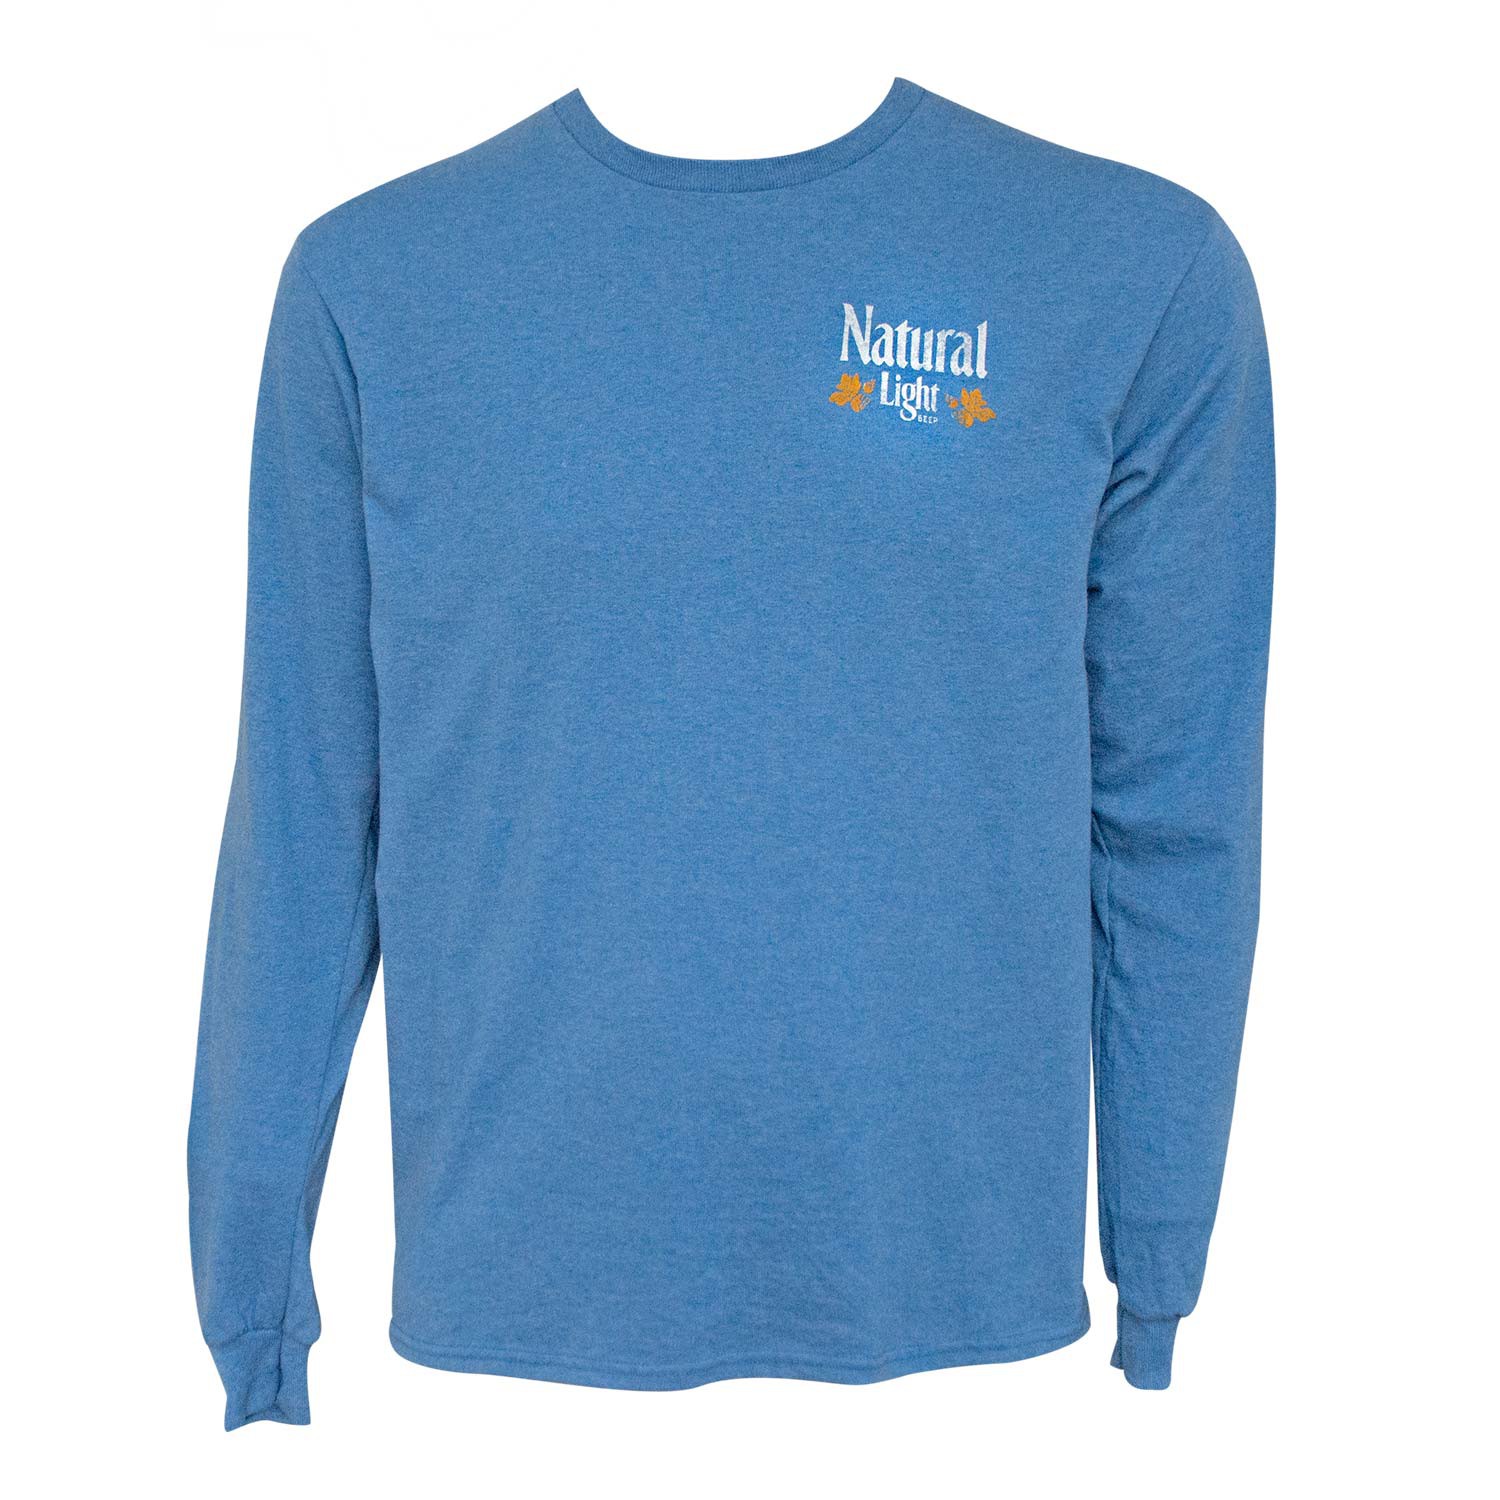 Natural Light Long Sleeve Blue Double Sided Print Tee Shirt